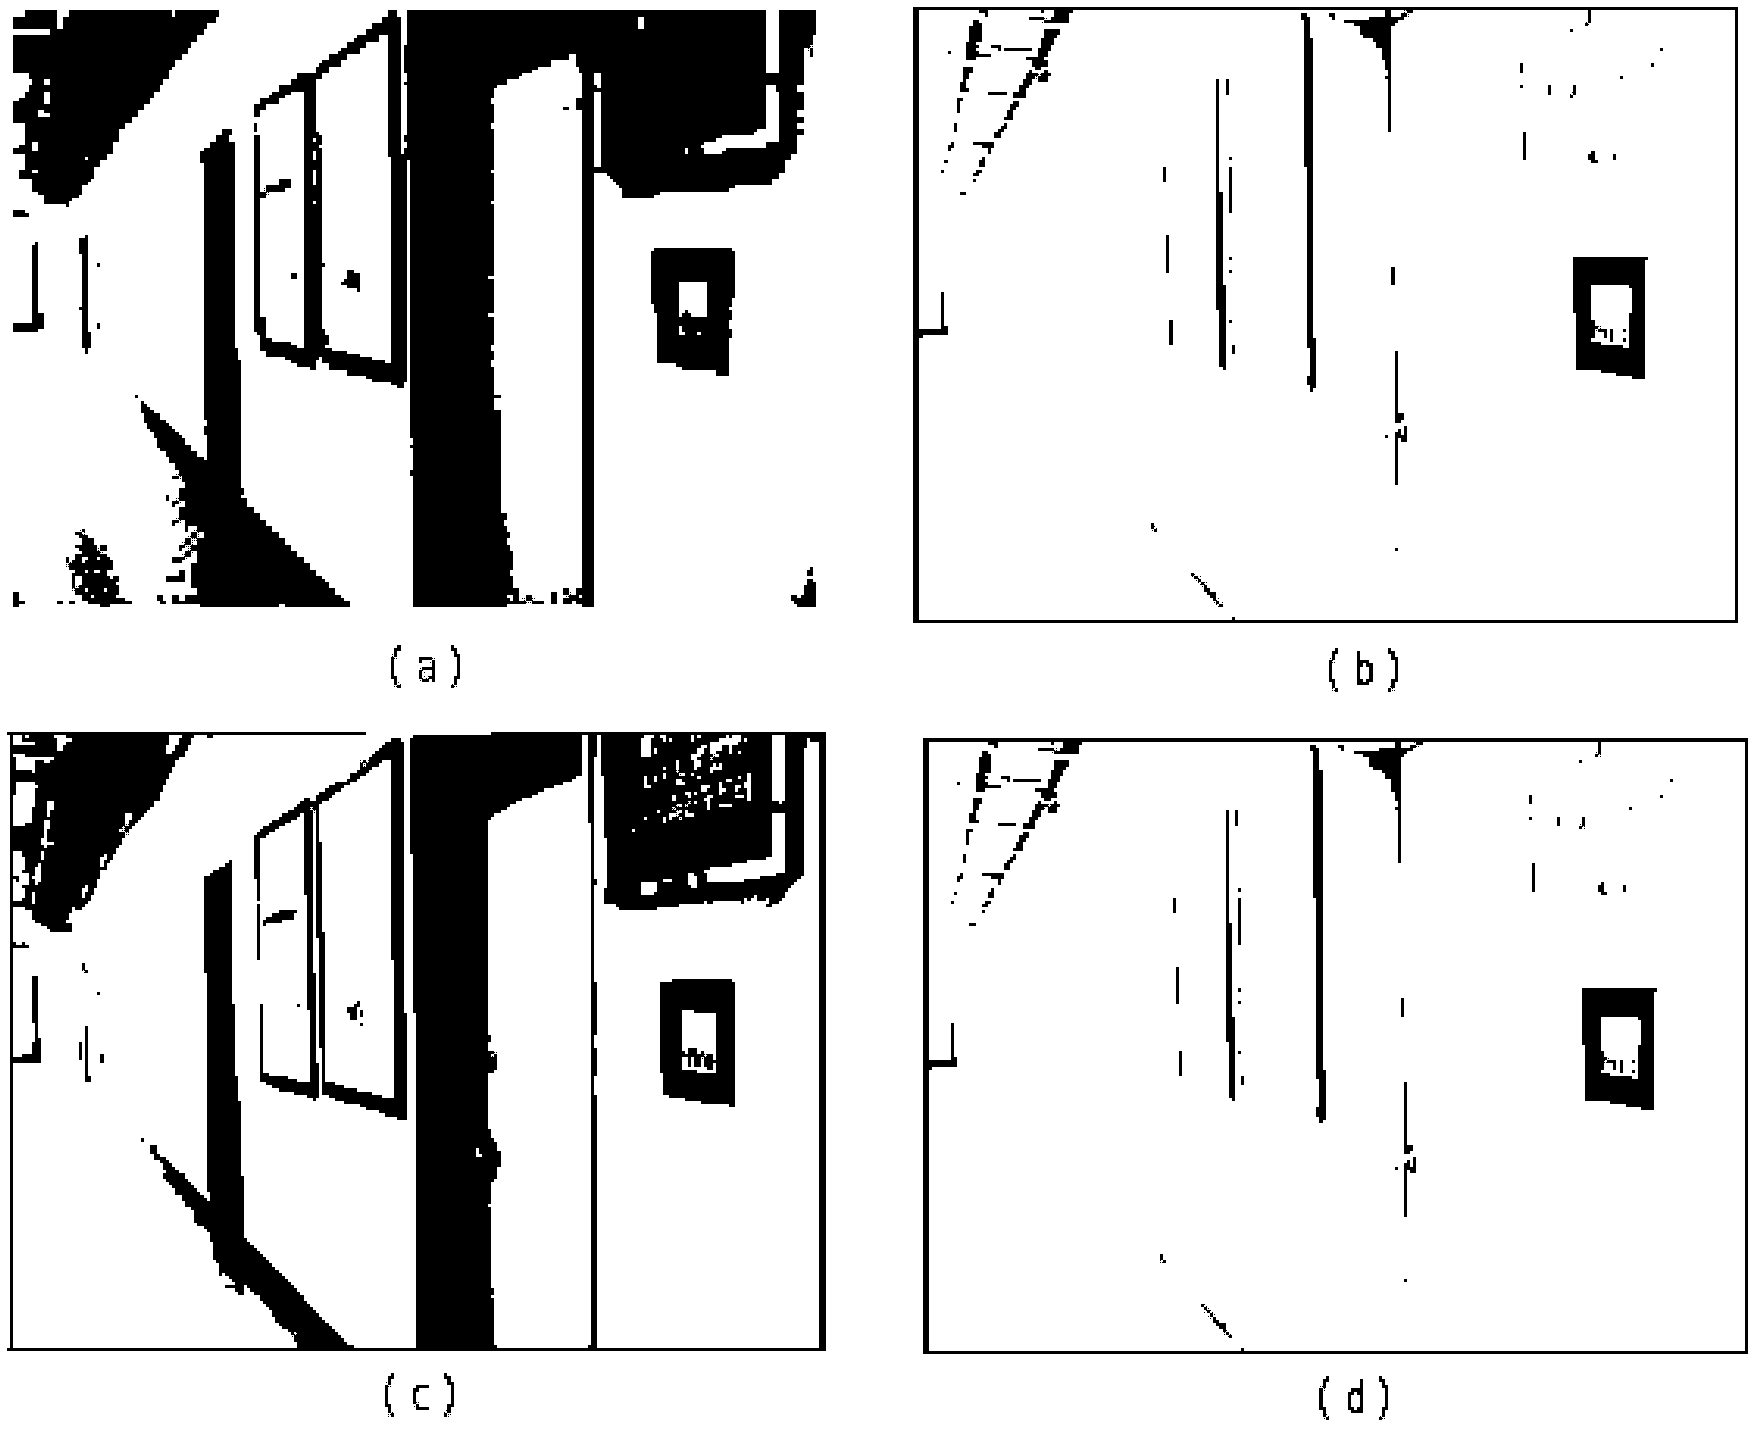 Indoor path navigation method based on mixed reality